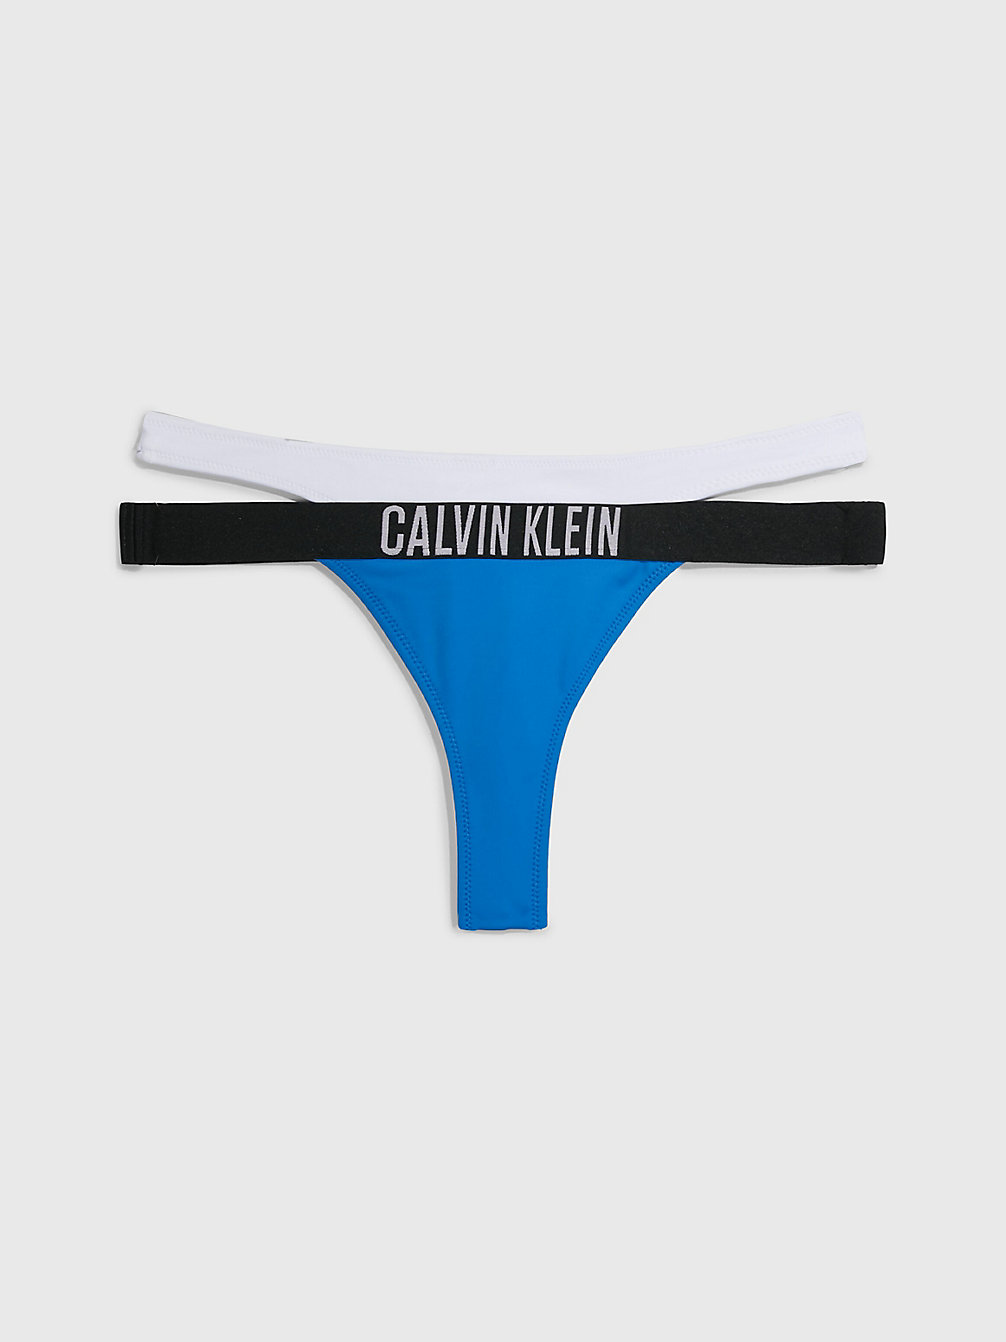 Bas De Bikini String - Intense Power > DYNAMIC BLUE > undefined femmes > Calvin Klein